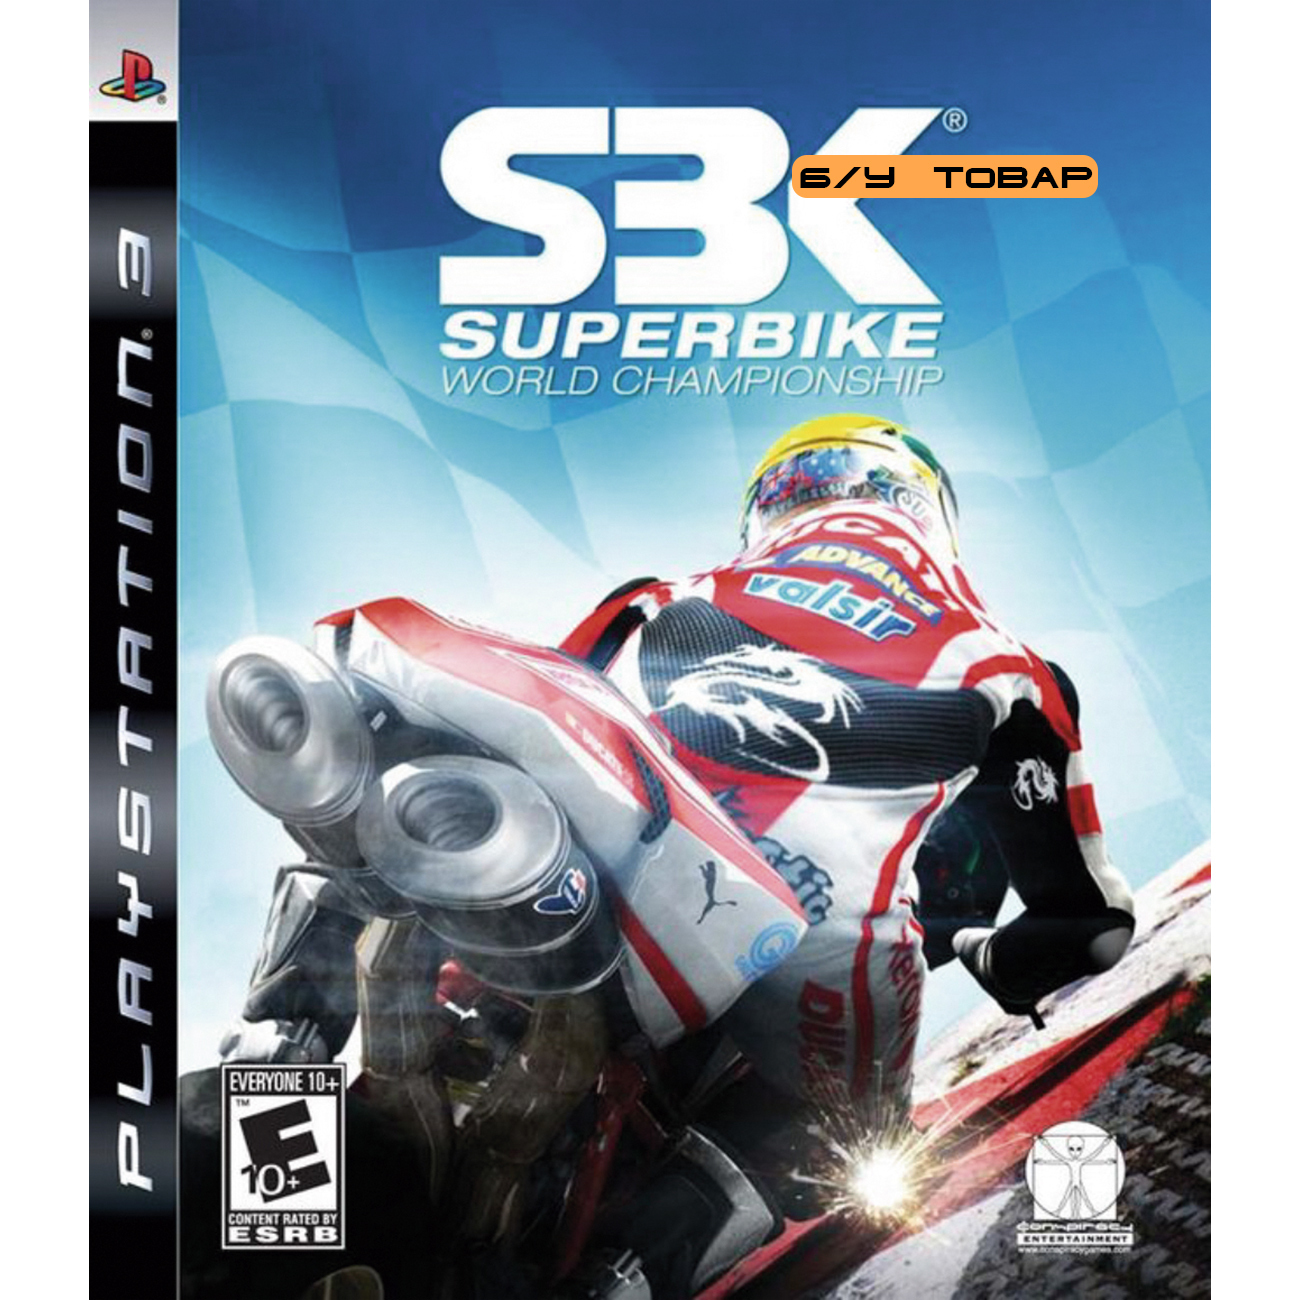 World champ игра. SBK X Xbox 360. SBK-08 Superbike (Xbox 360. SBK - Superbike World Championship ps2 обложка. SBK ps2.